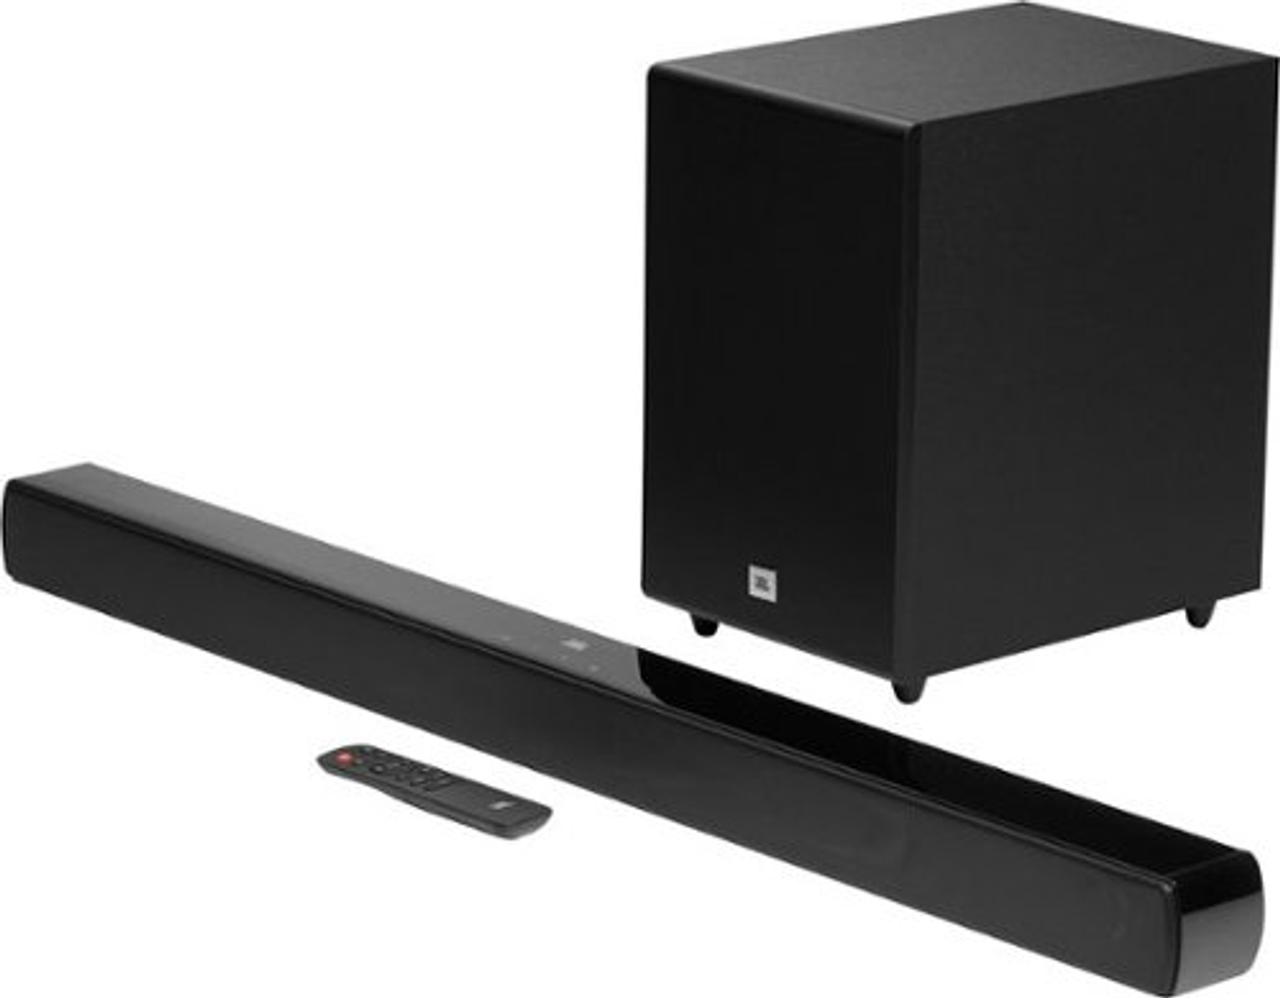 JBL - Cinema SB170 2.1 channel soundbar with wireless subwoofer - Black